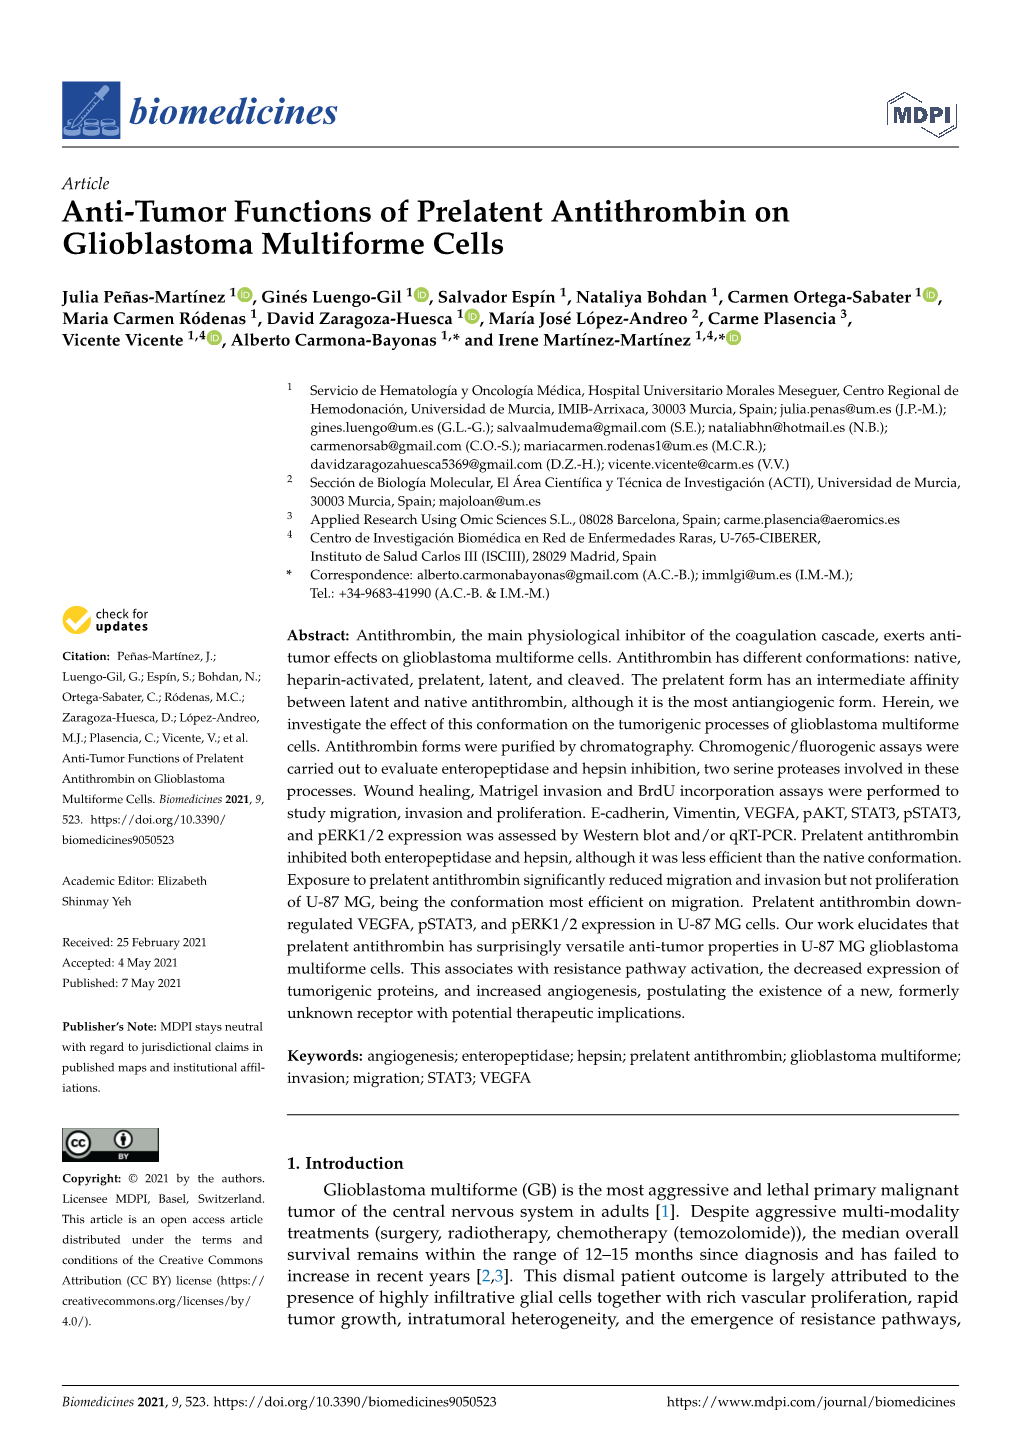 Anti-Tumor Functions of Prelatent Antithrombin on Glioblastoma Multiforme Cells